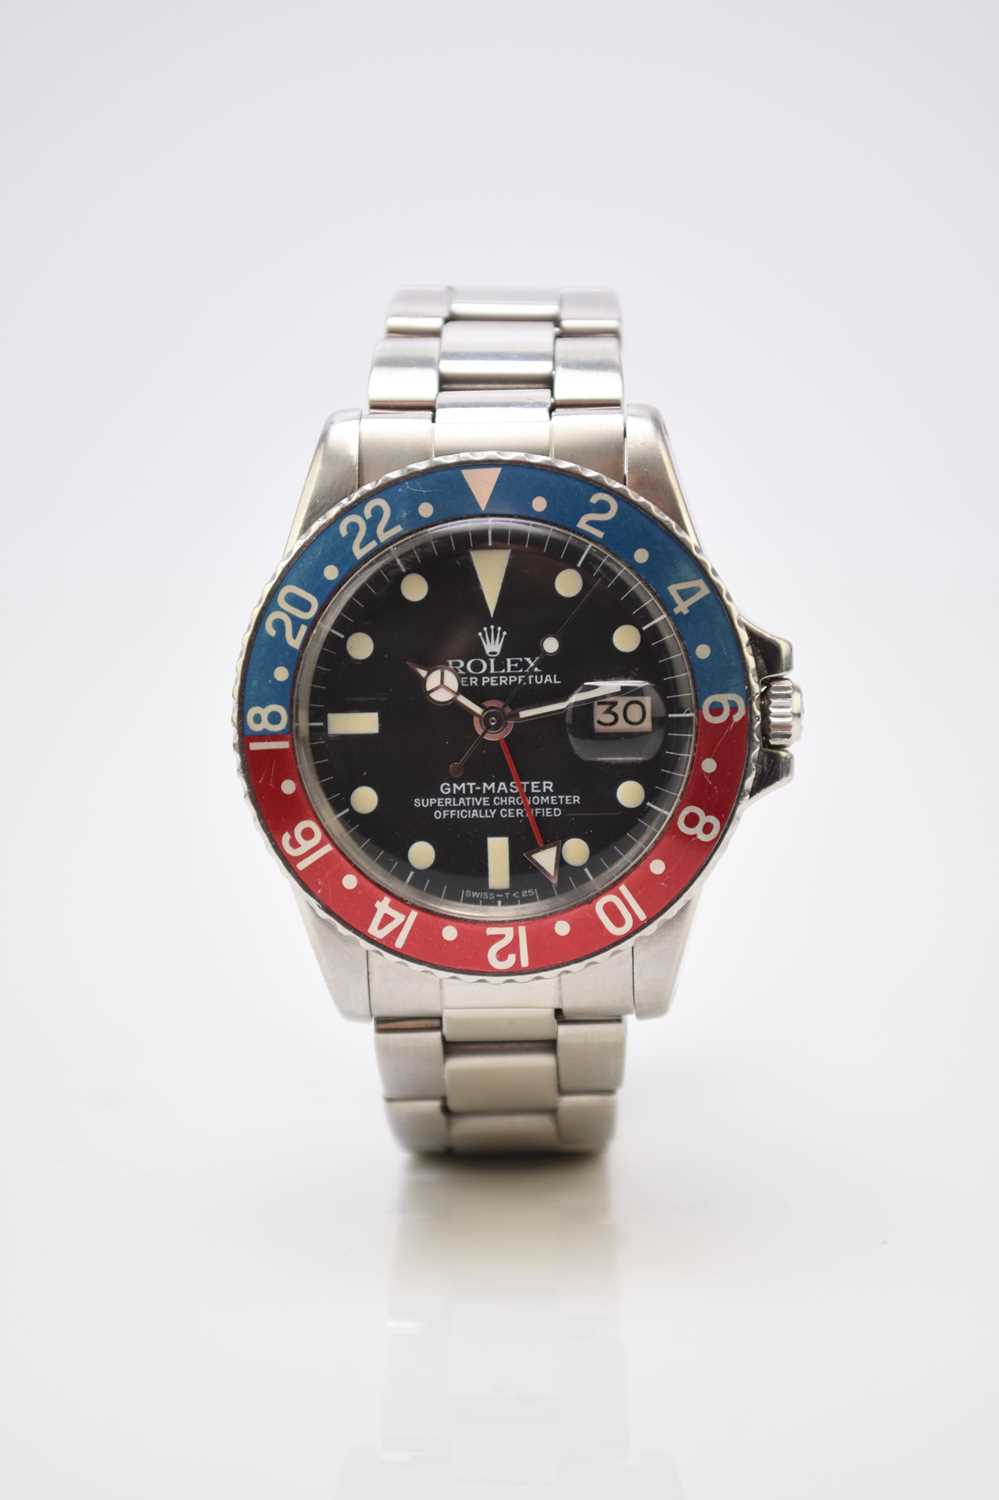 Lot 63 - Rolex: A gentleman's stainless steel GMT Master automatic calendar dual-time bracelet watch